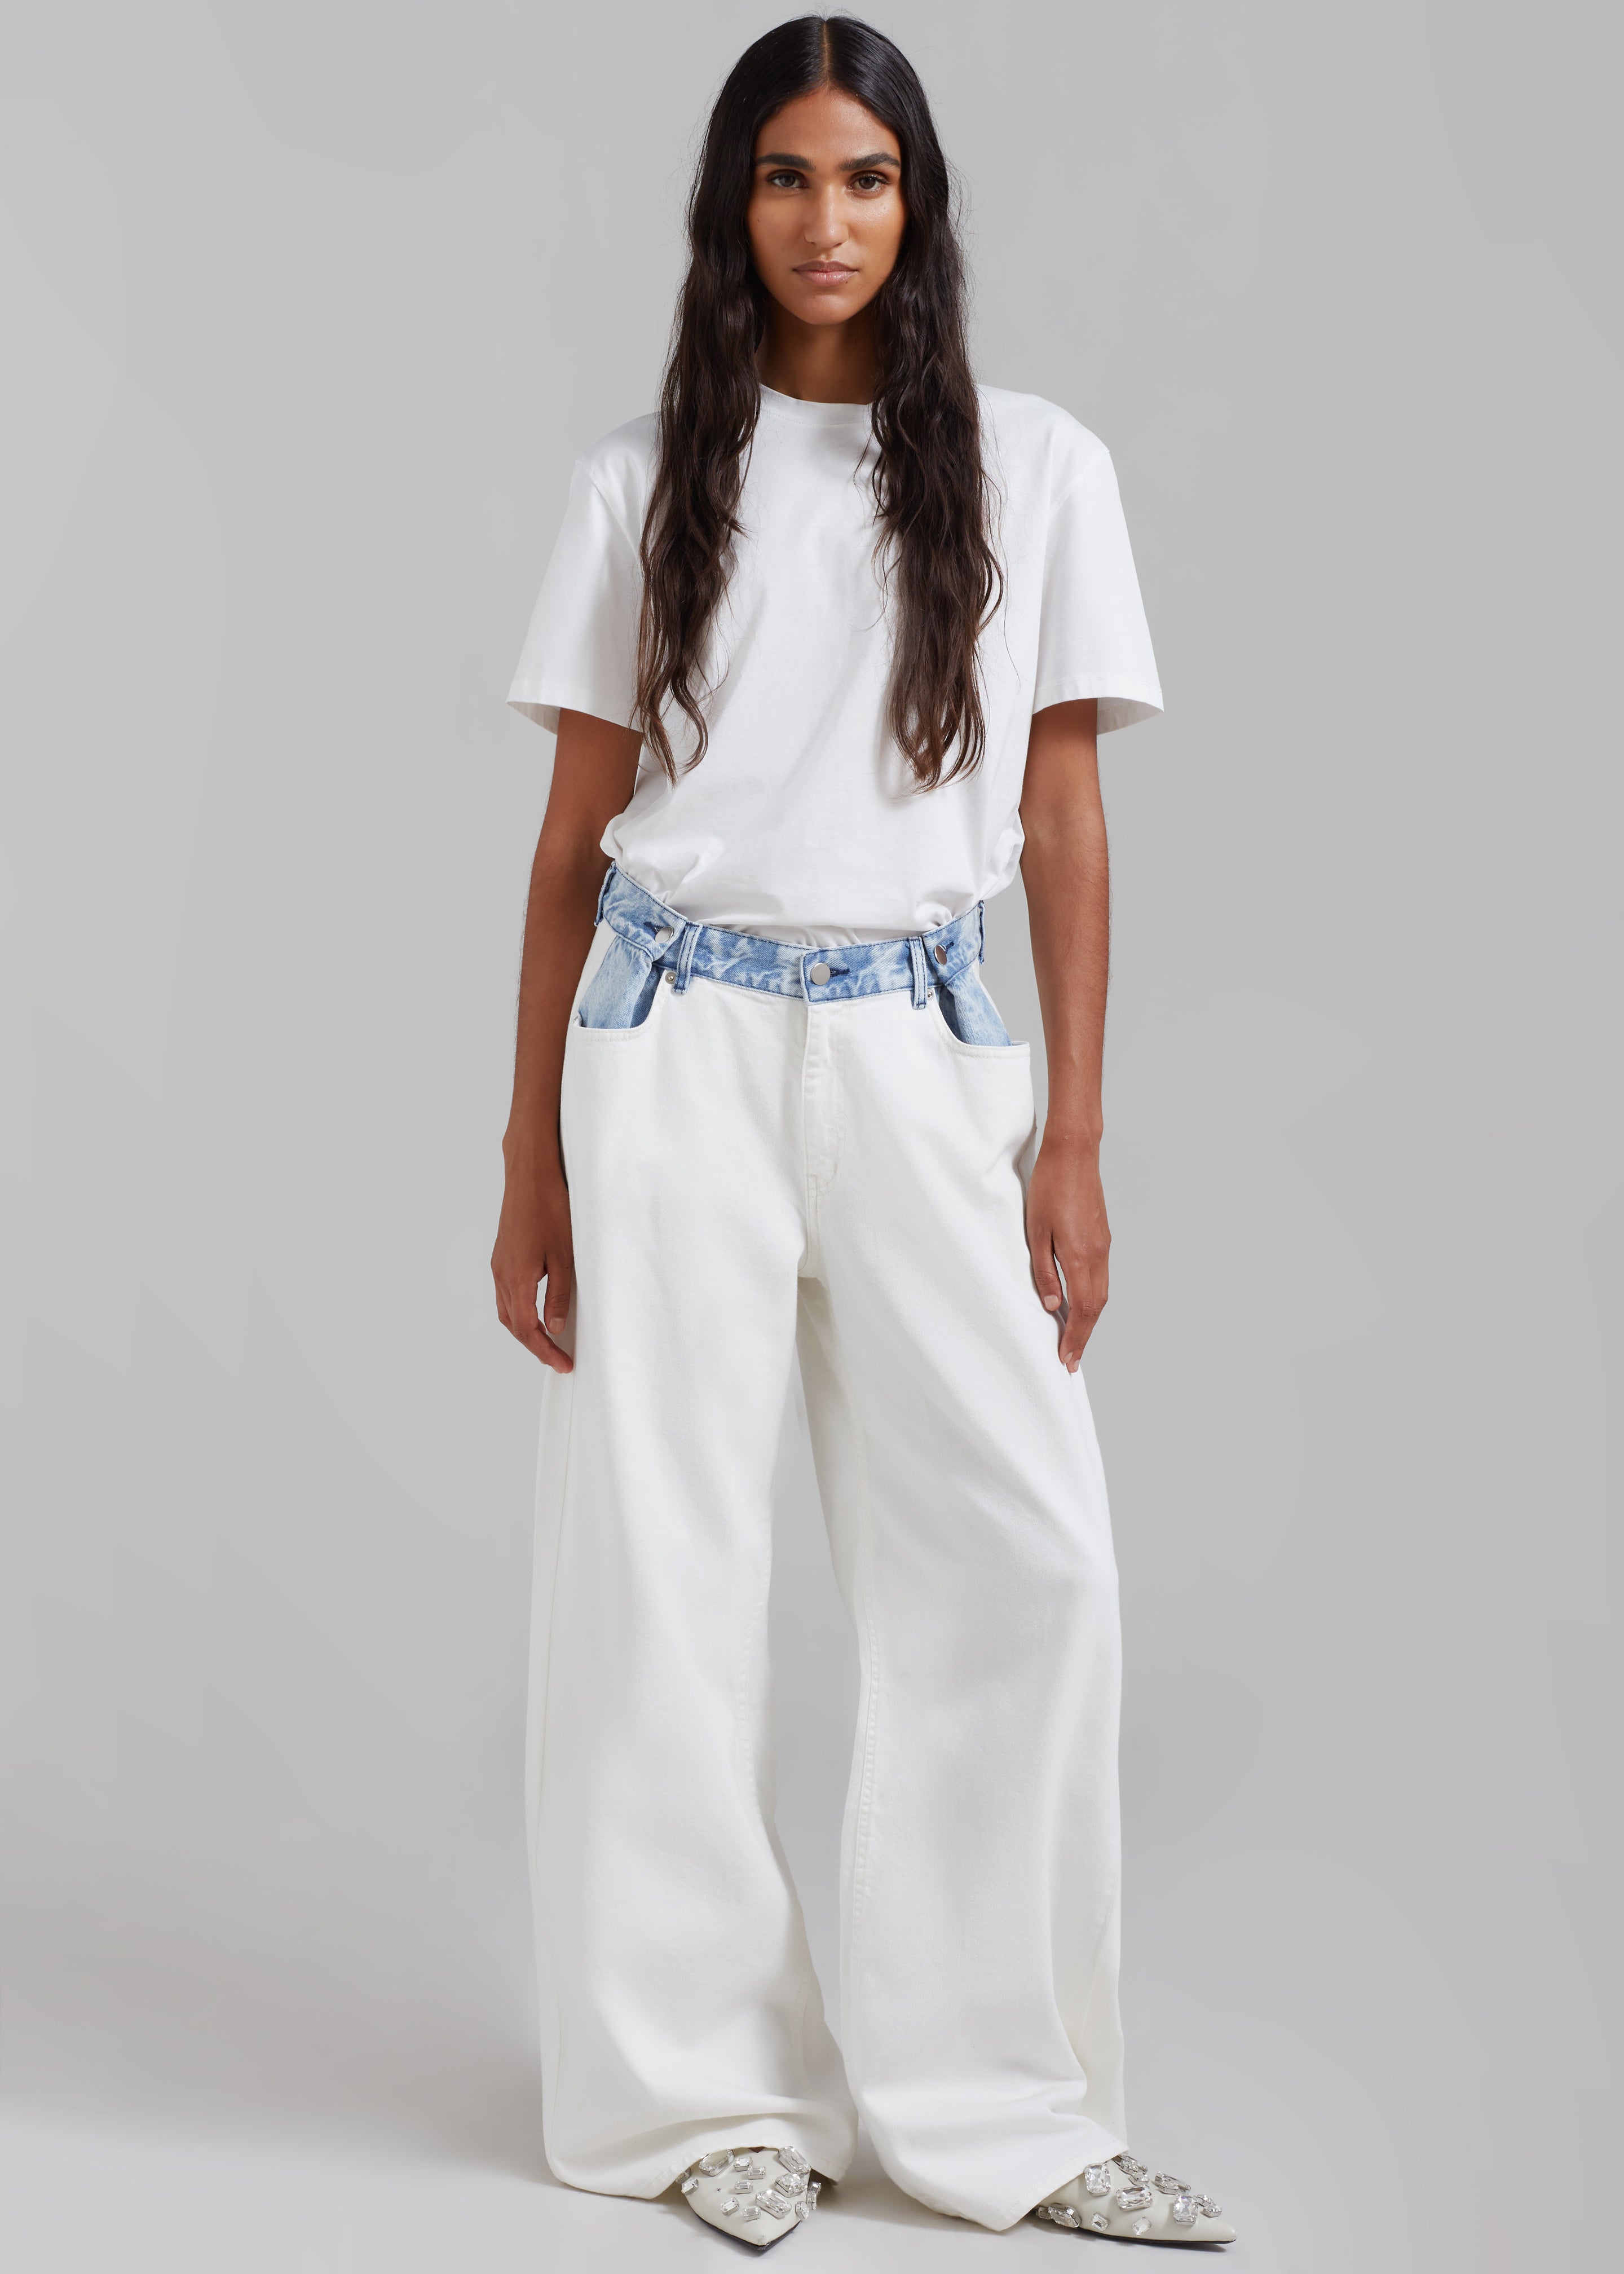 Zara, Pants & Jumpsuits, Zara Womens White Pants Size Xs